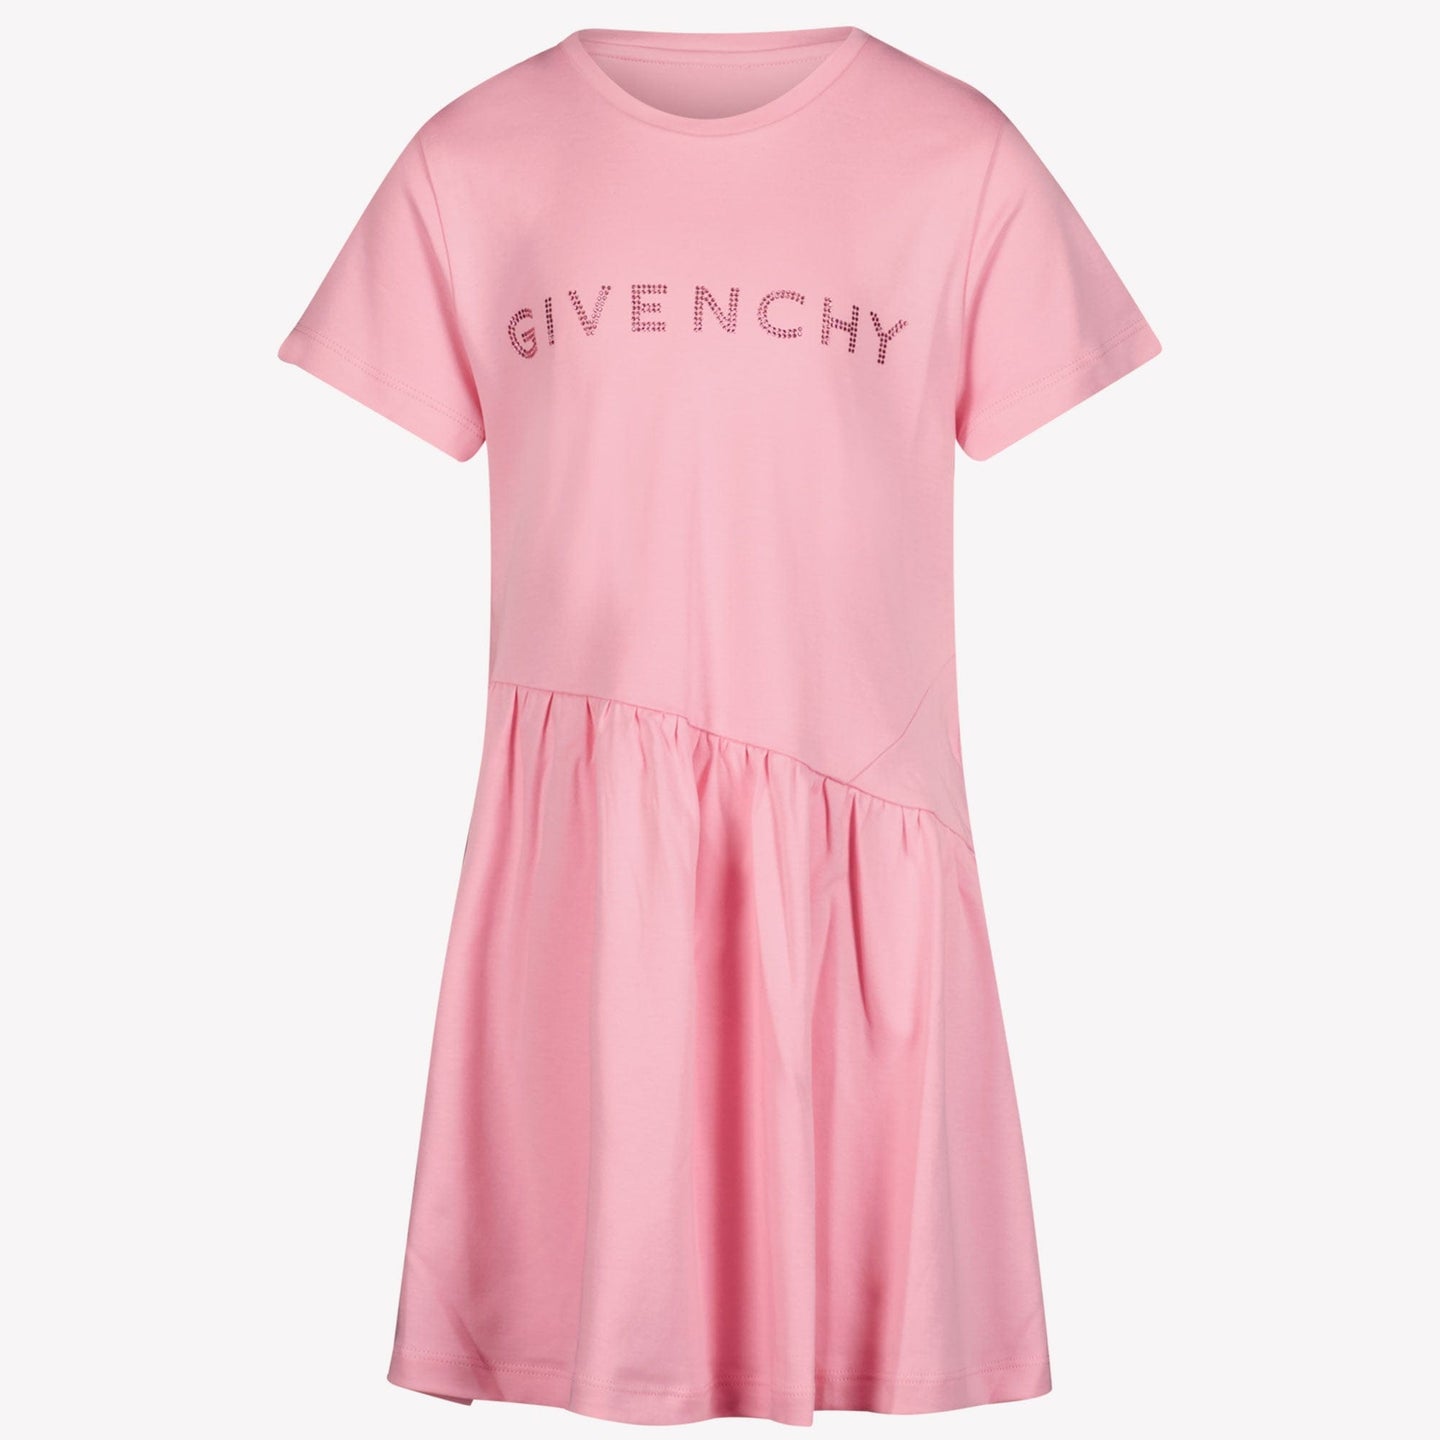 Givenchy Ragazze Vestito Rosa